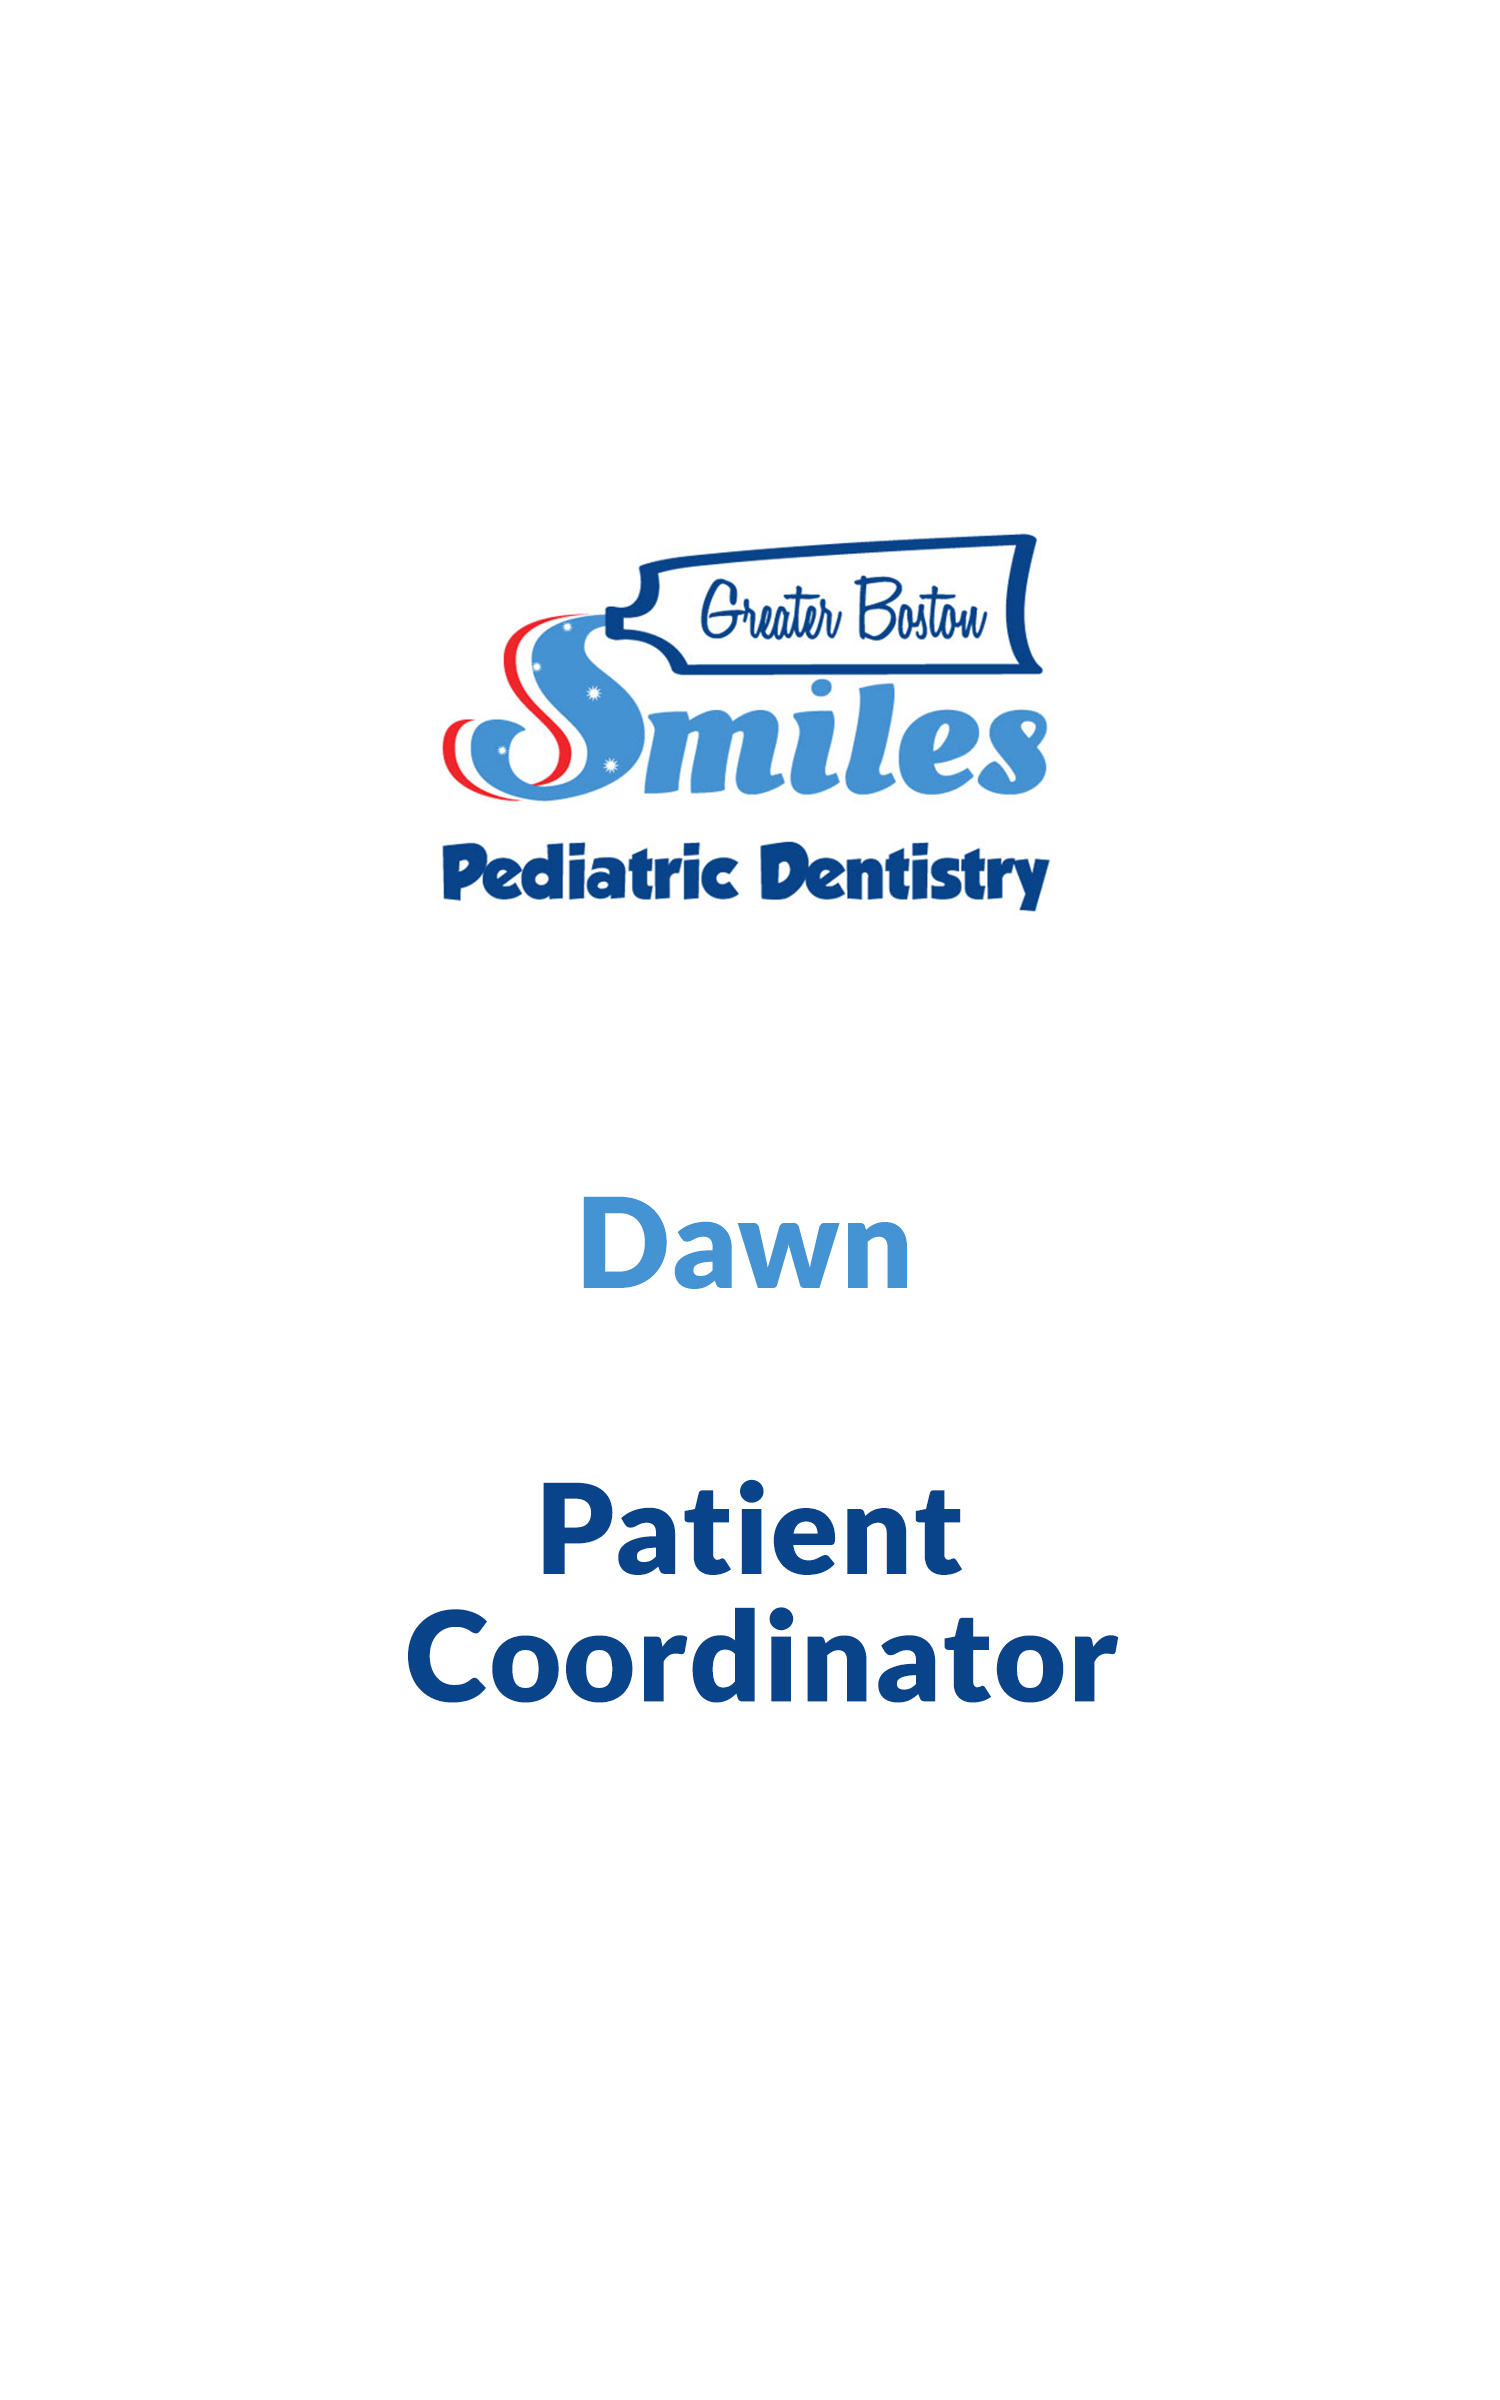 Dawn, Patient Coordinator